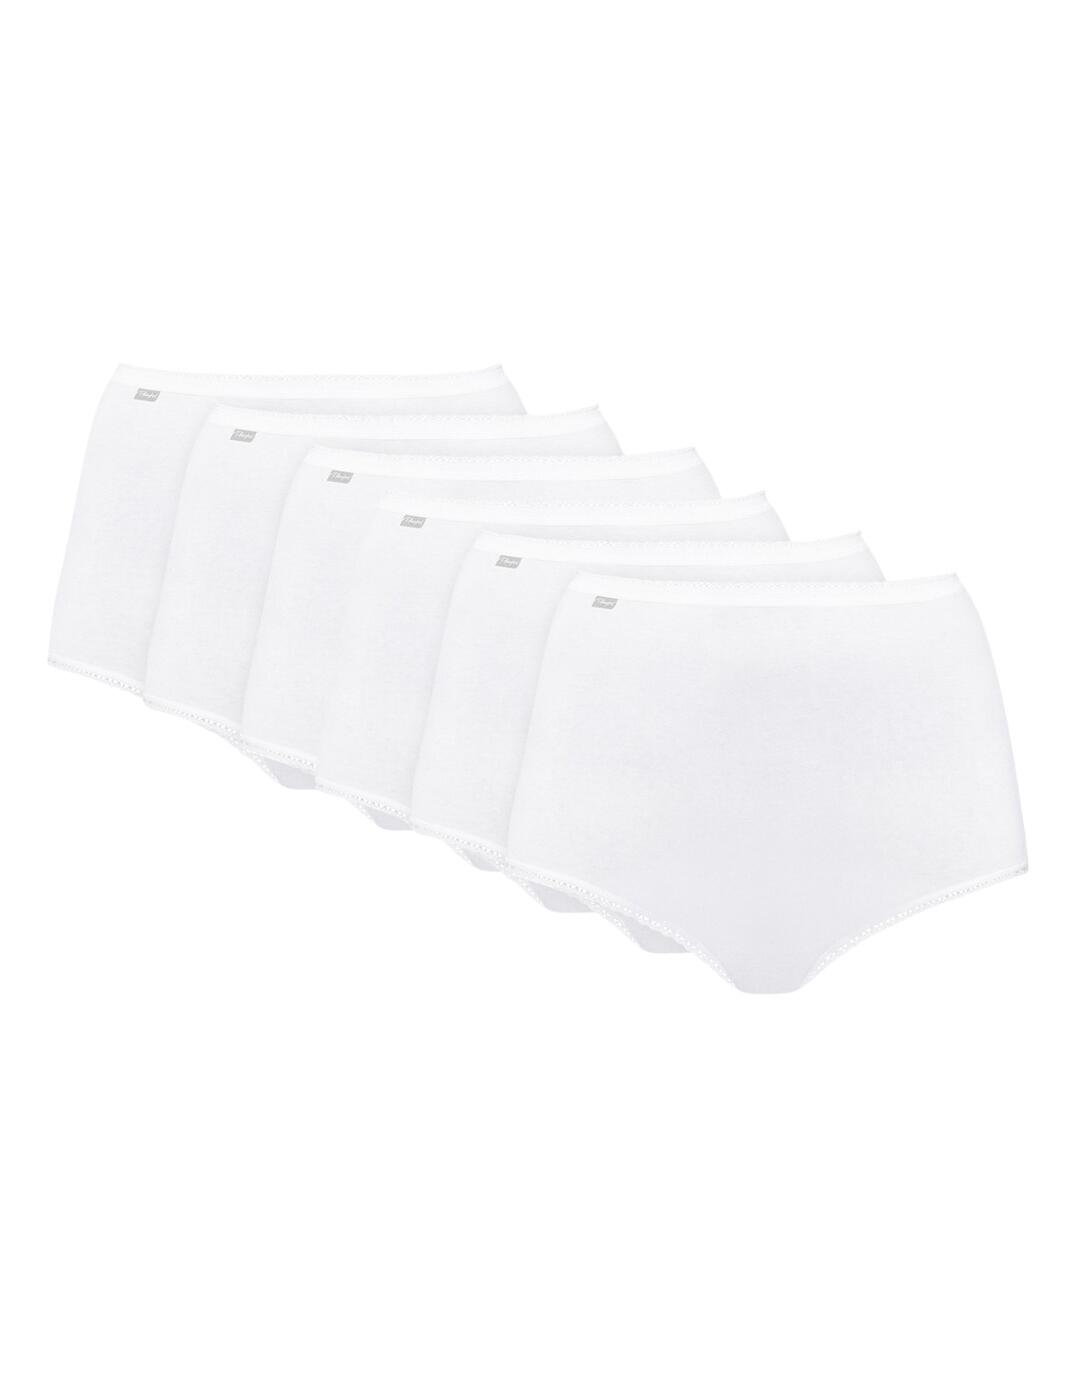 Playtex Pure Cotton Maxi Stretch Brief 6 Pack White